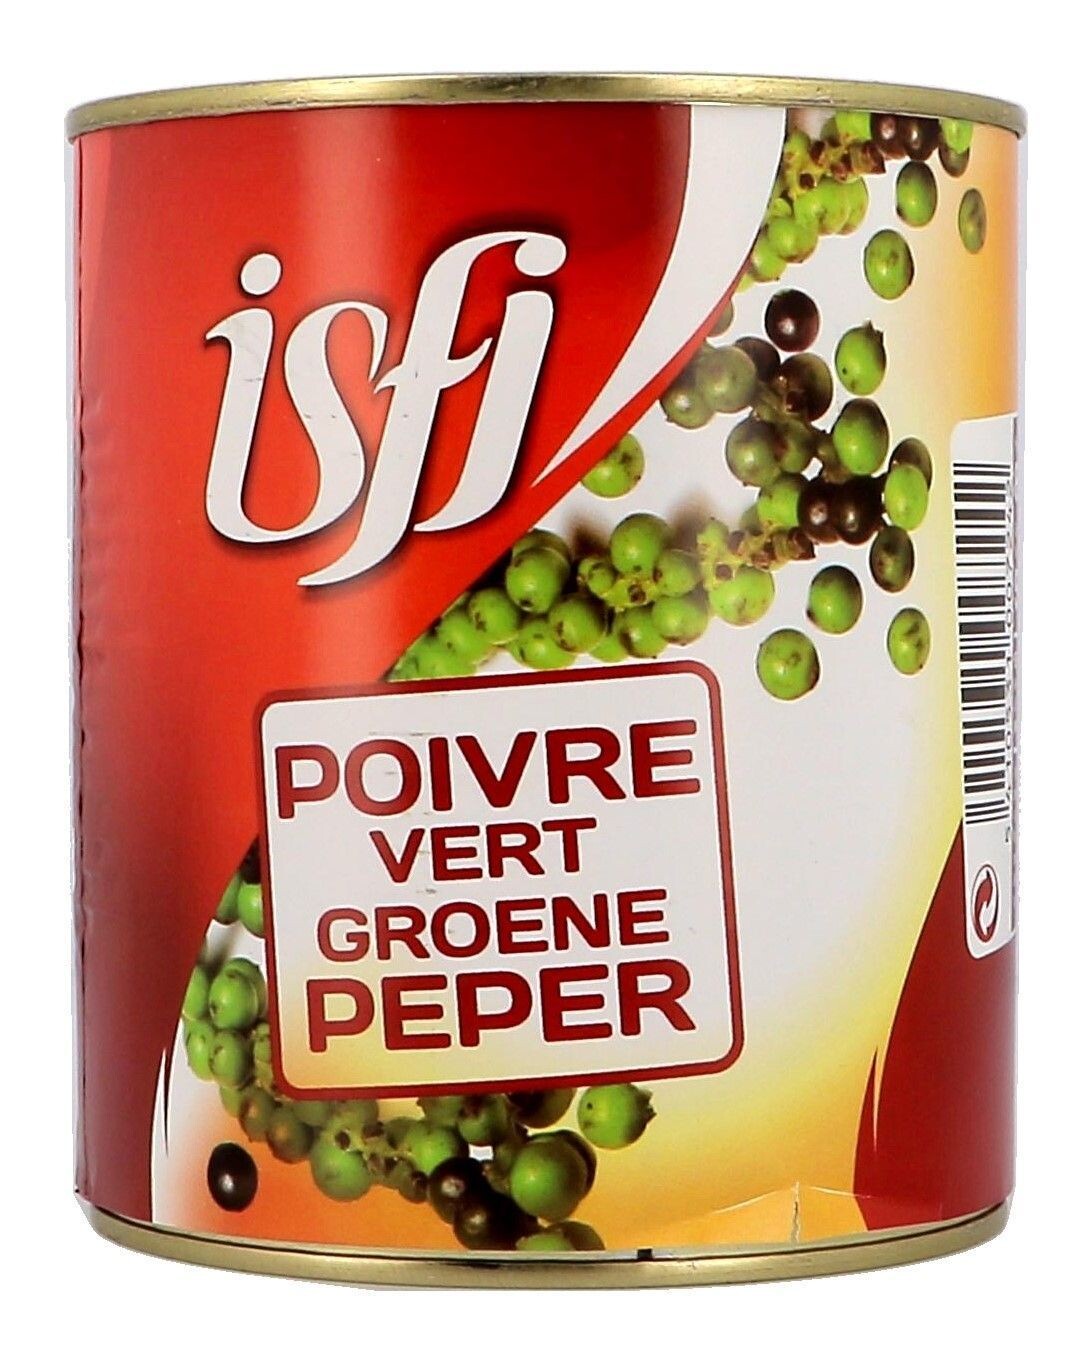 Green Peppercorn in brine 500gr Isfi Spices (Isfi & Verstegen,Zout & Peper)